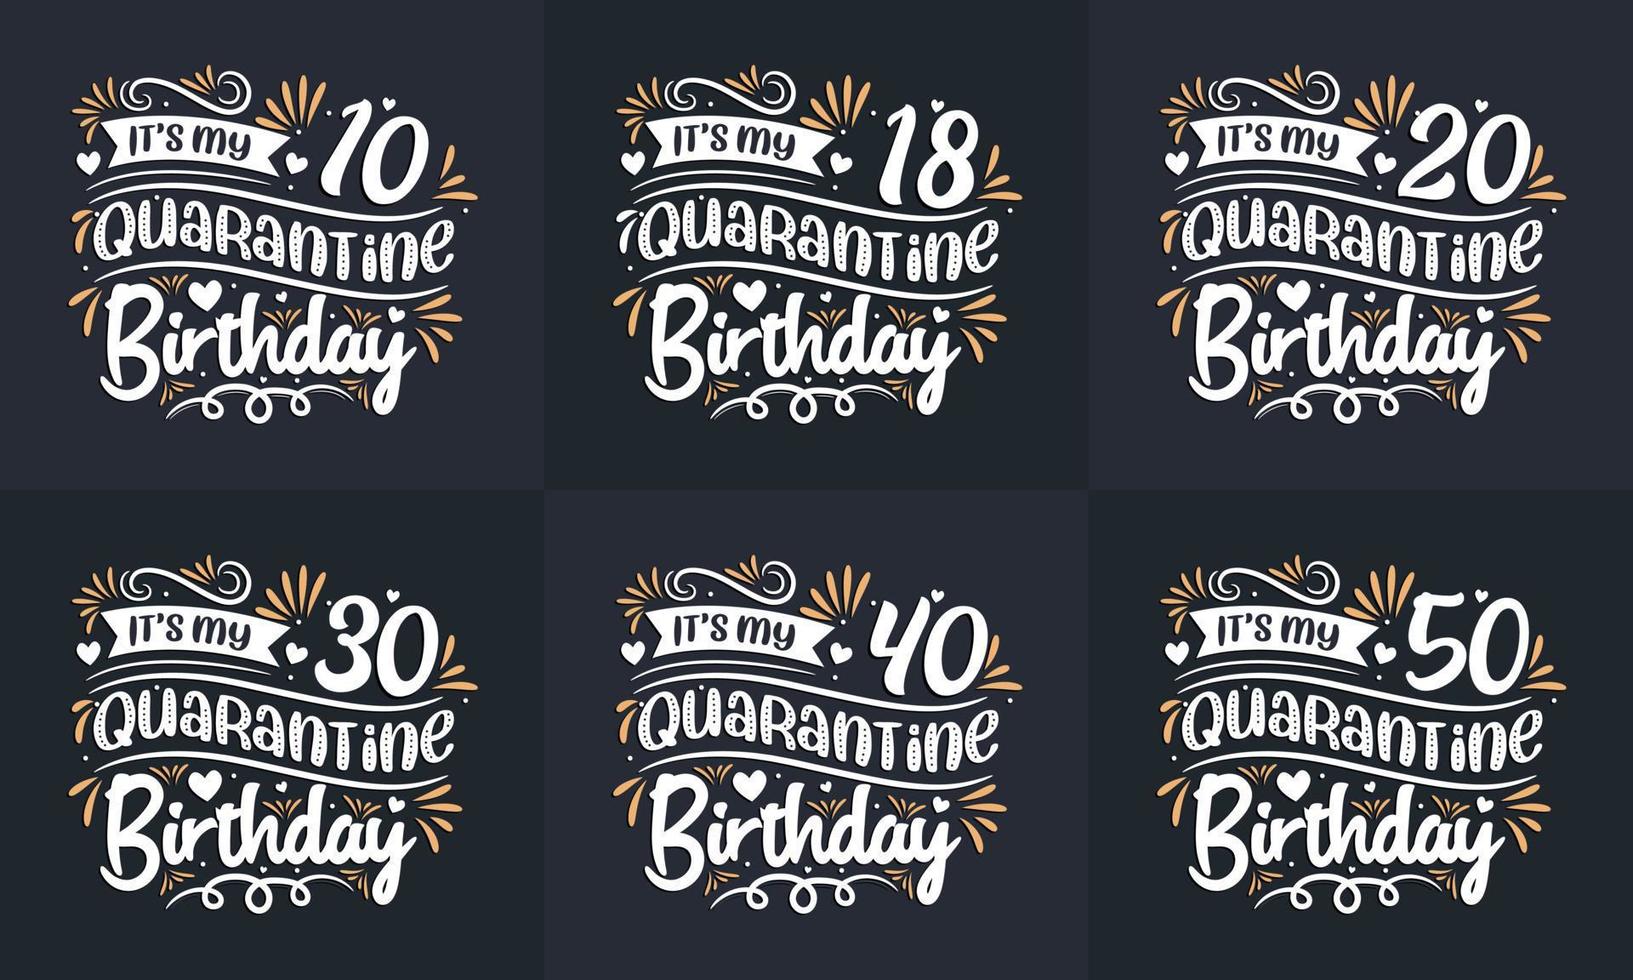 Quarantine Birthday design set. Quarantine Birthday celebration Typography quote design bundle. It's my 10, 18, 20, 30, 40, 50 Quarantine Birthday vector